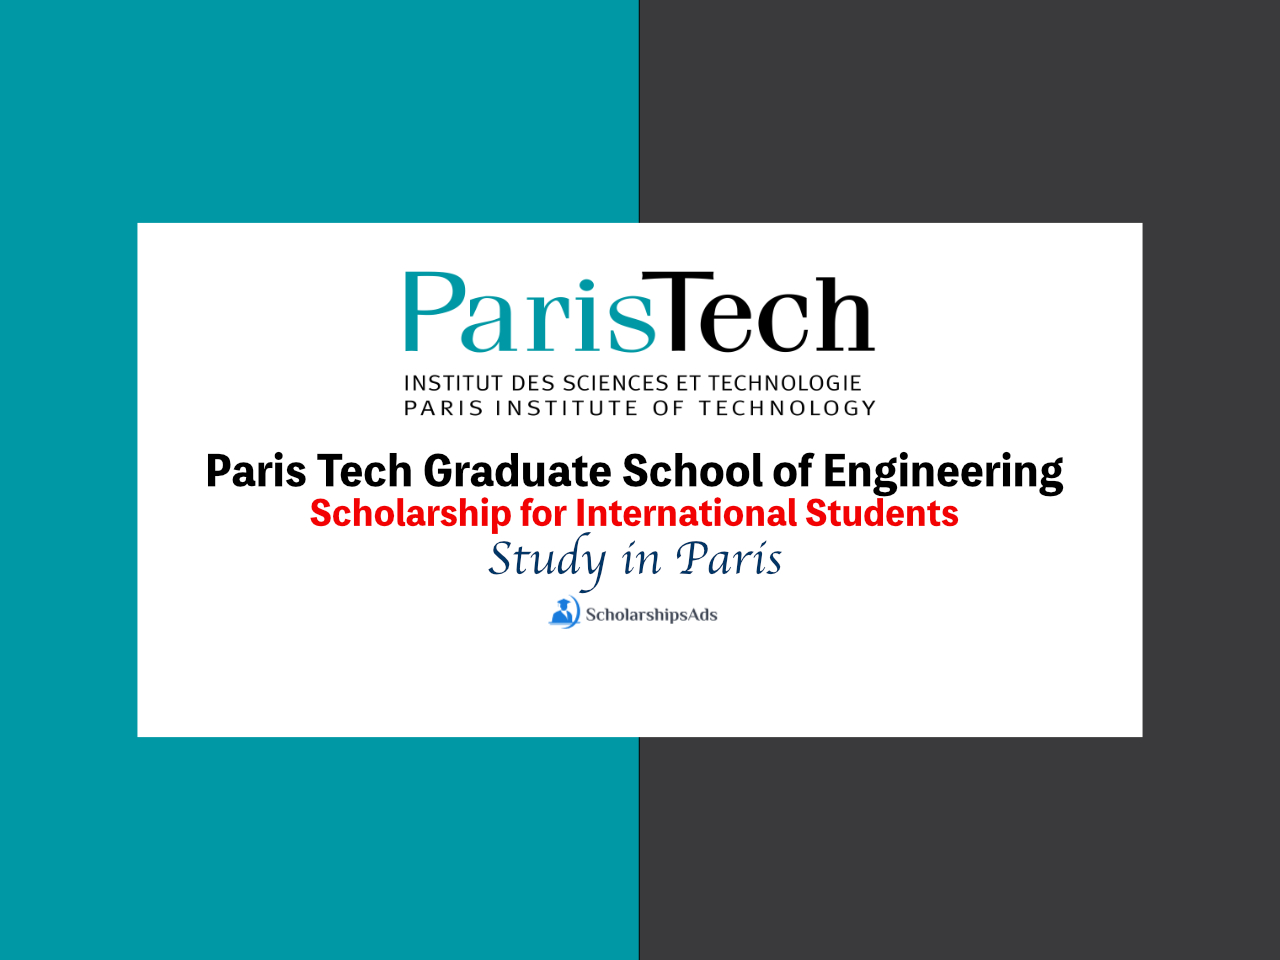  ParisTech Graduate School of Engineering Scholarships. 